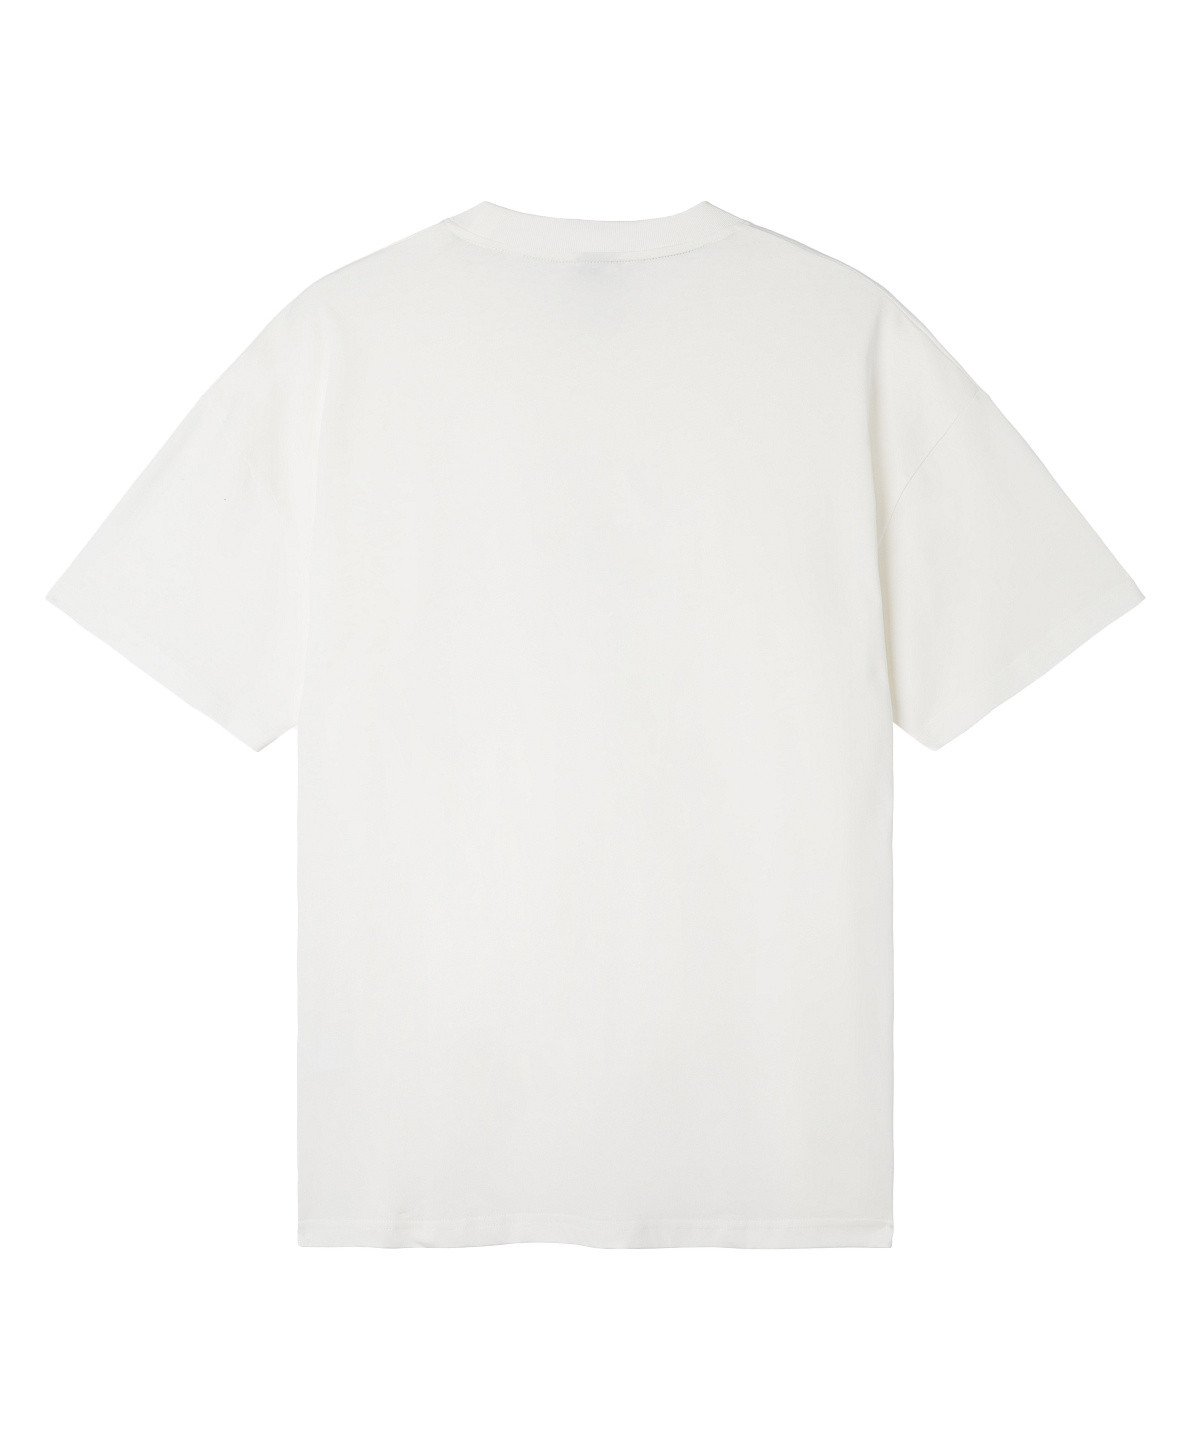 Funky - T-shirt girocollo con logo ovale, Bianco, large image number 1